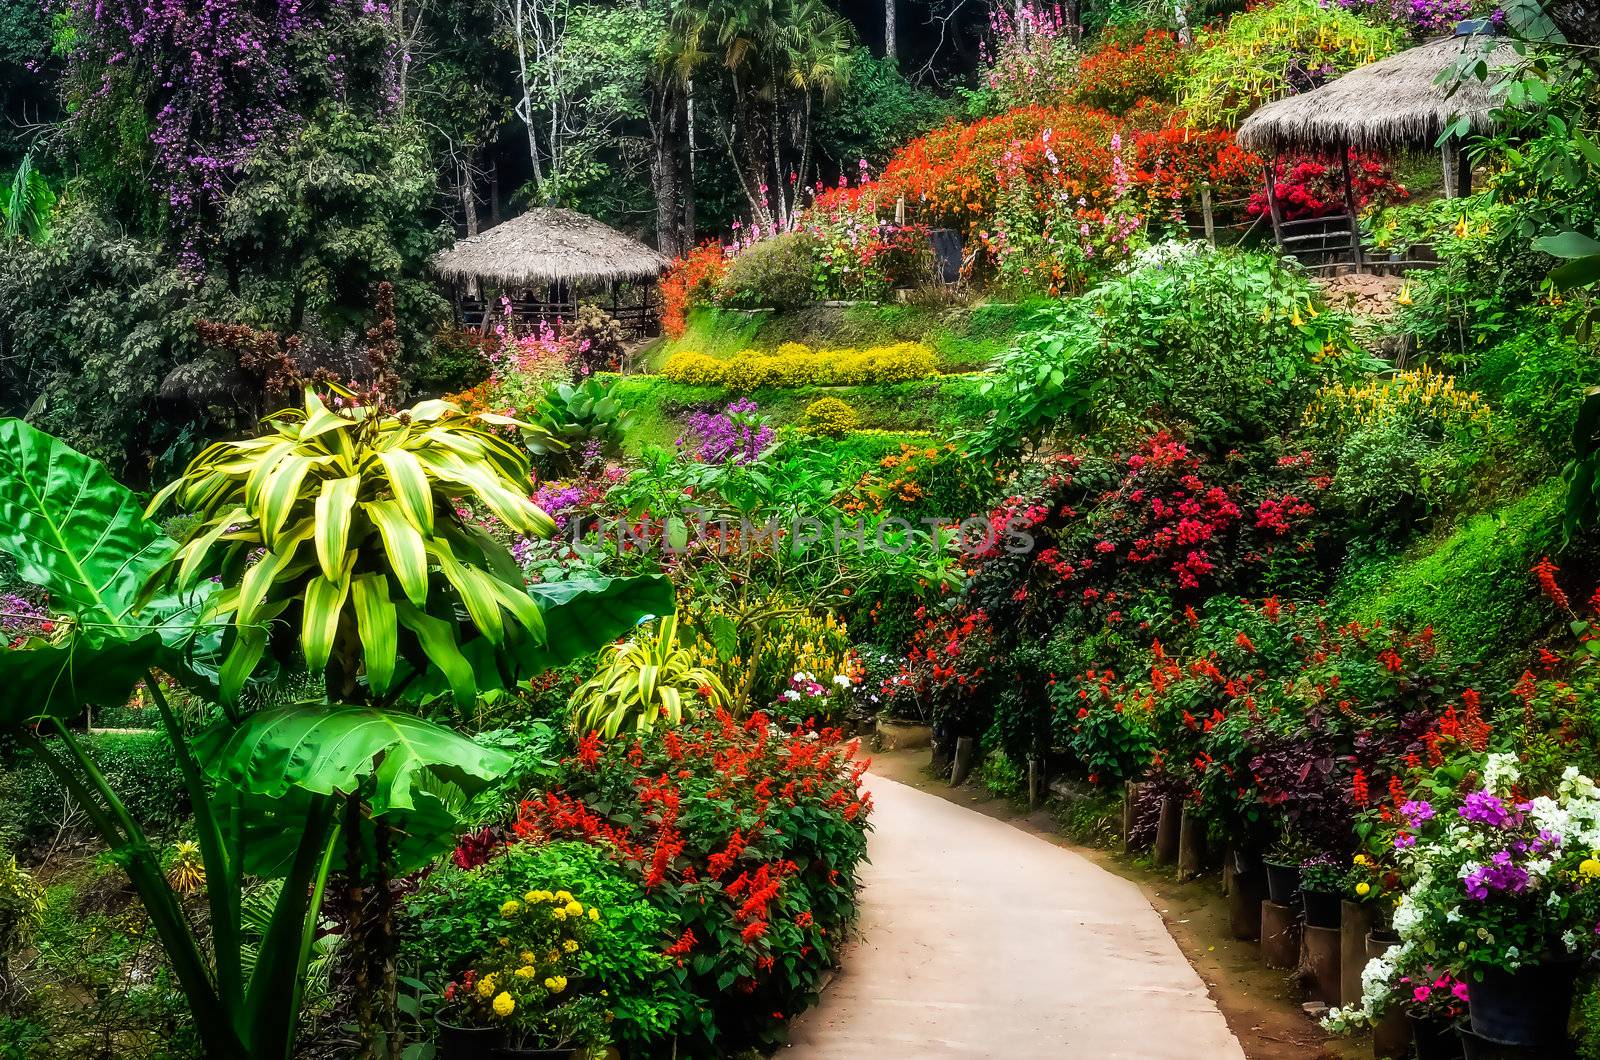 Landscaped colorful flower garden in blossom